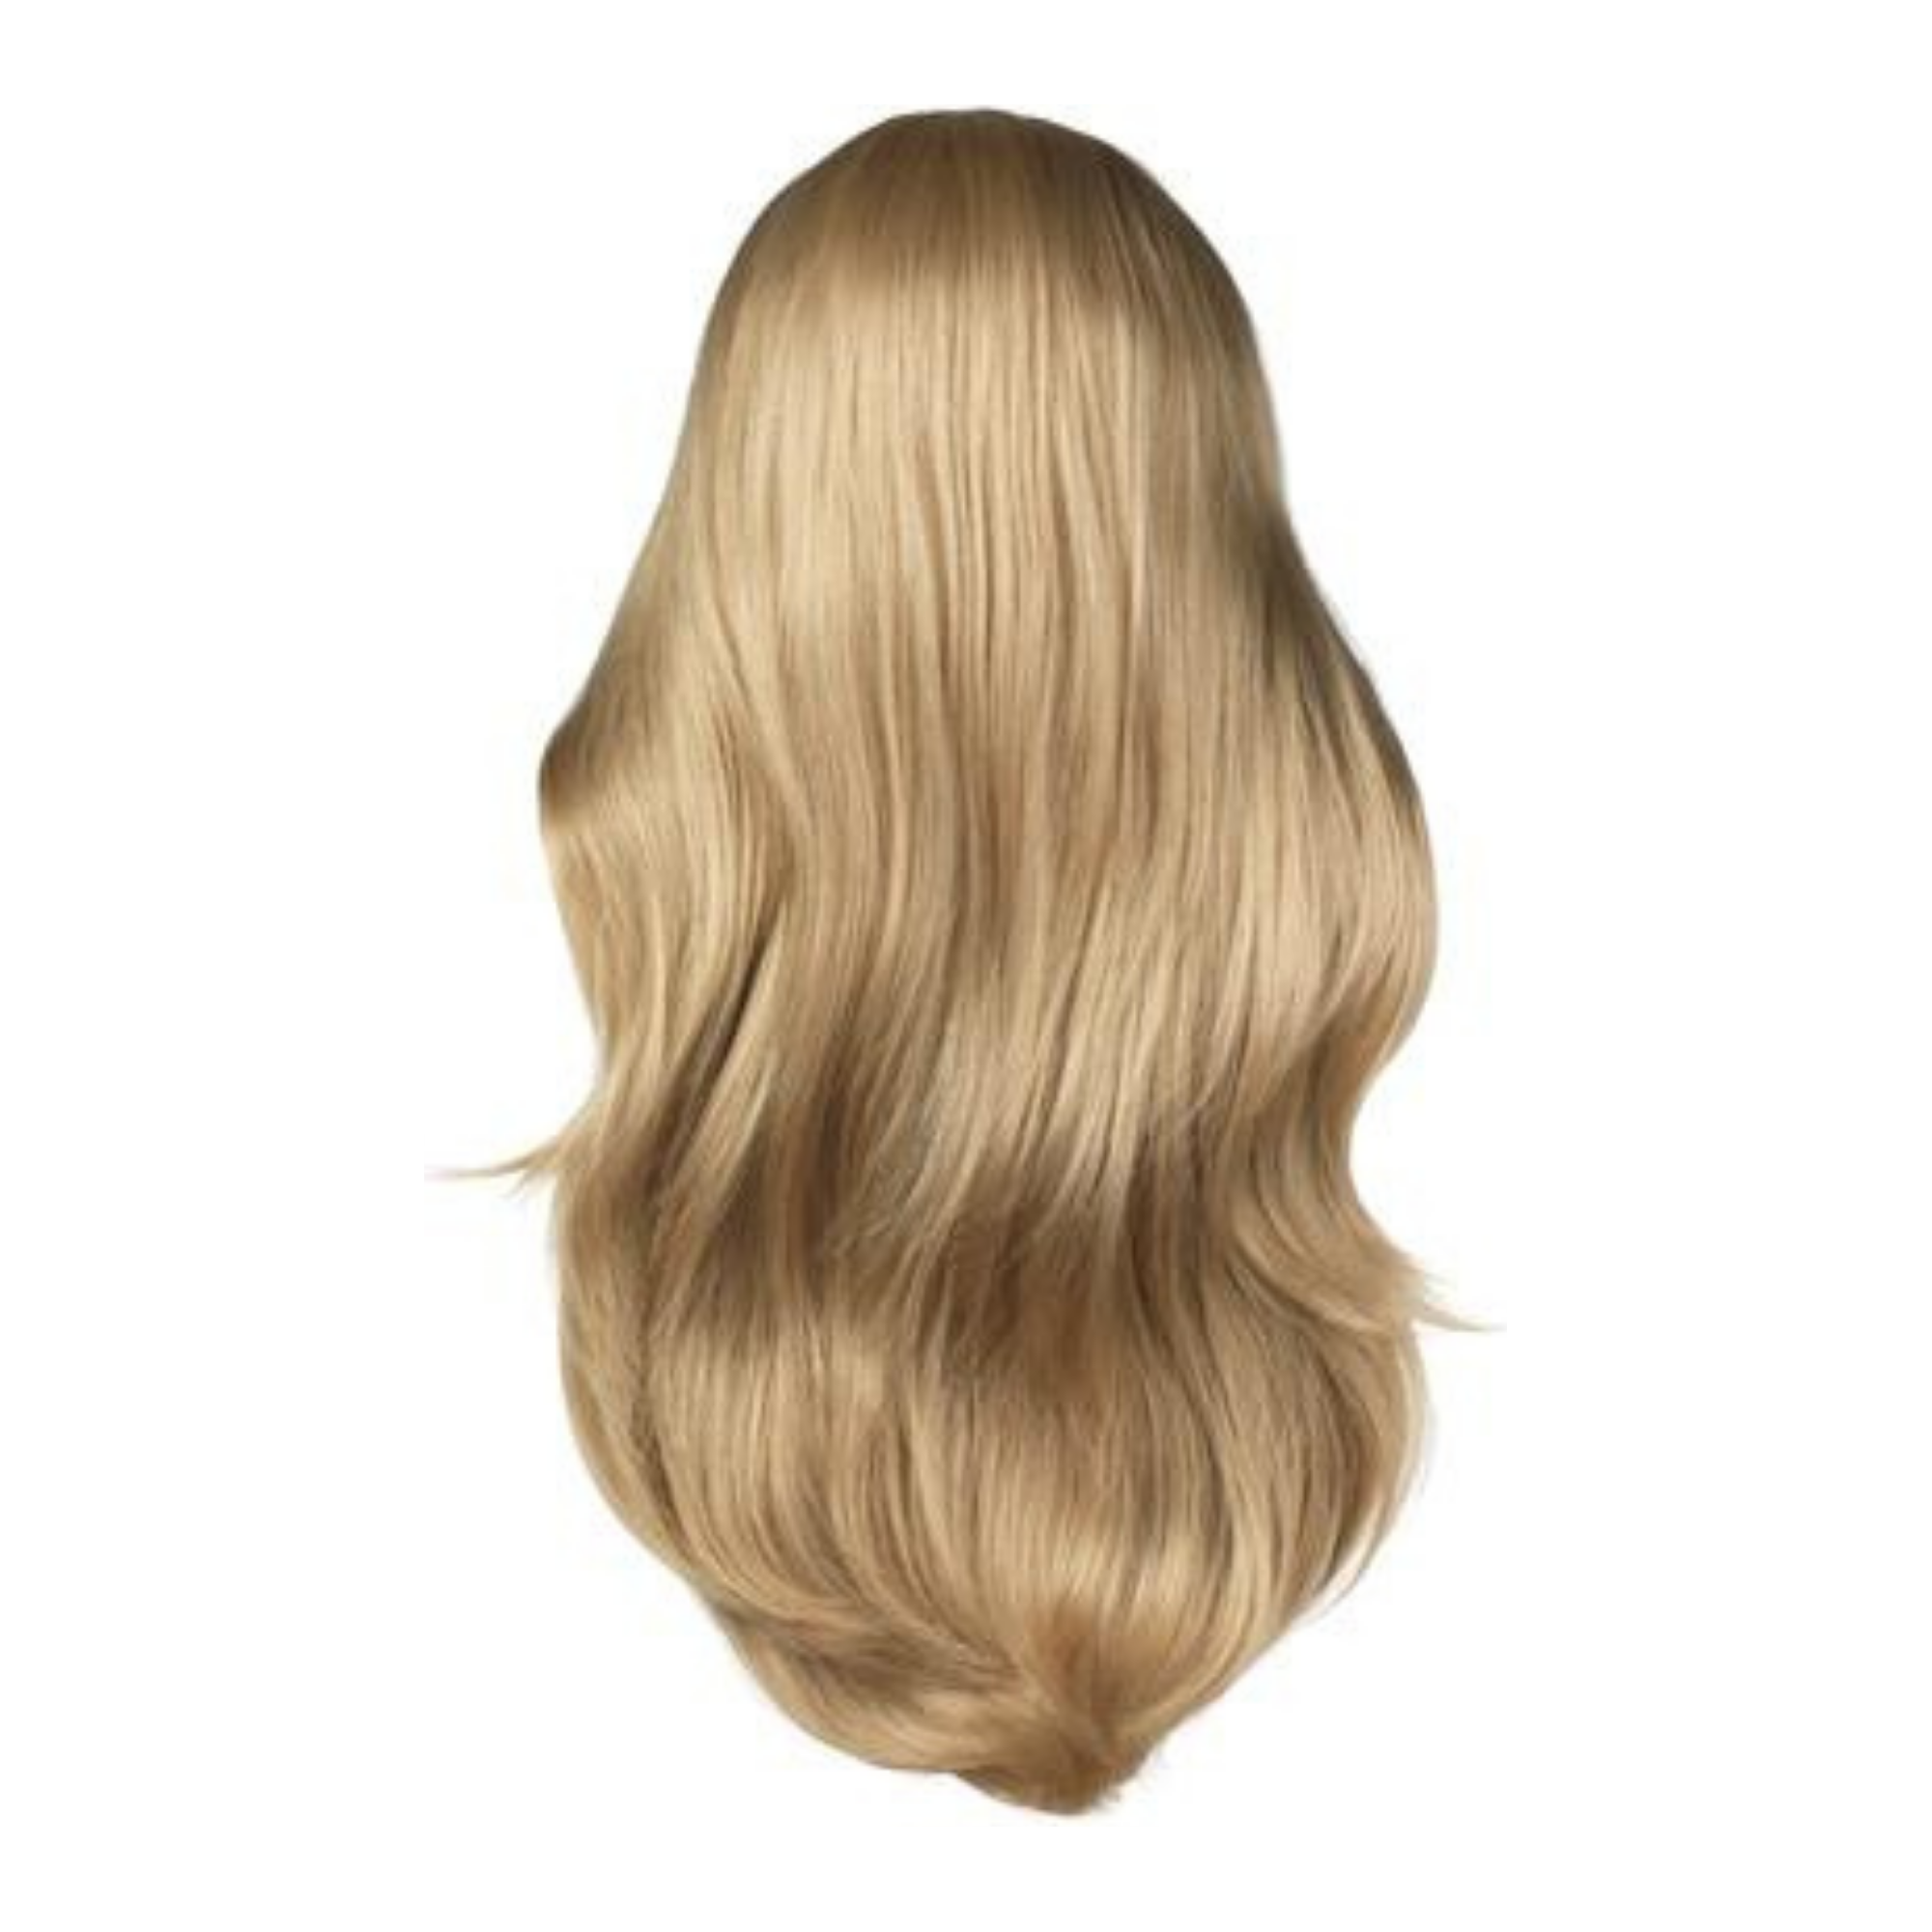 image of hair rehab london half wig hairpiece in shade beige